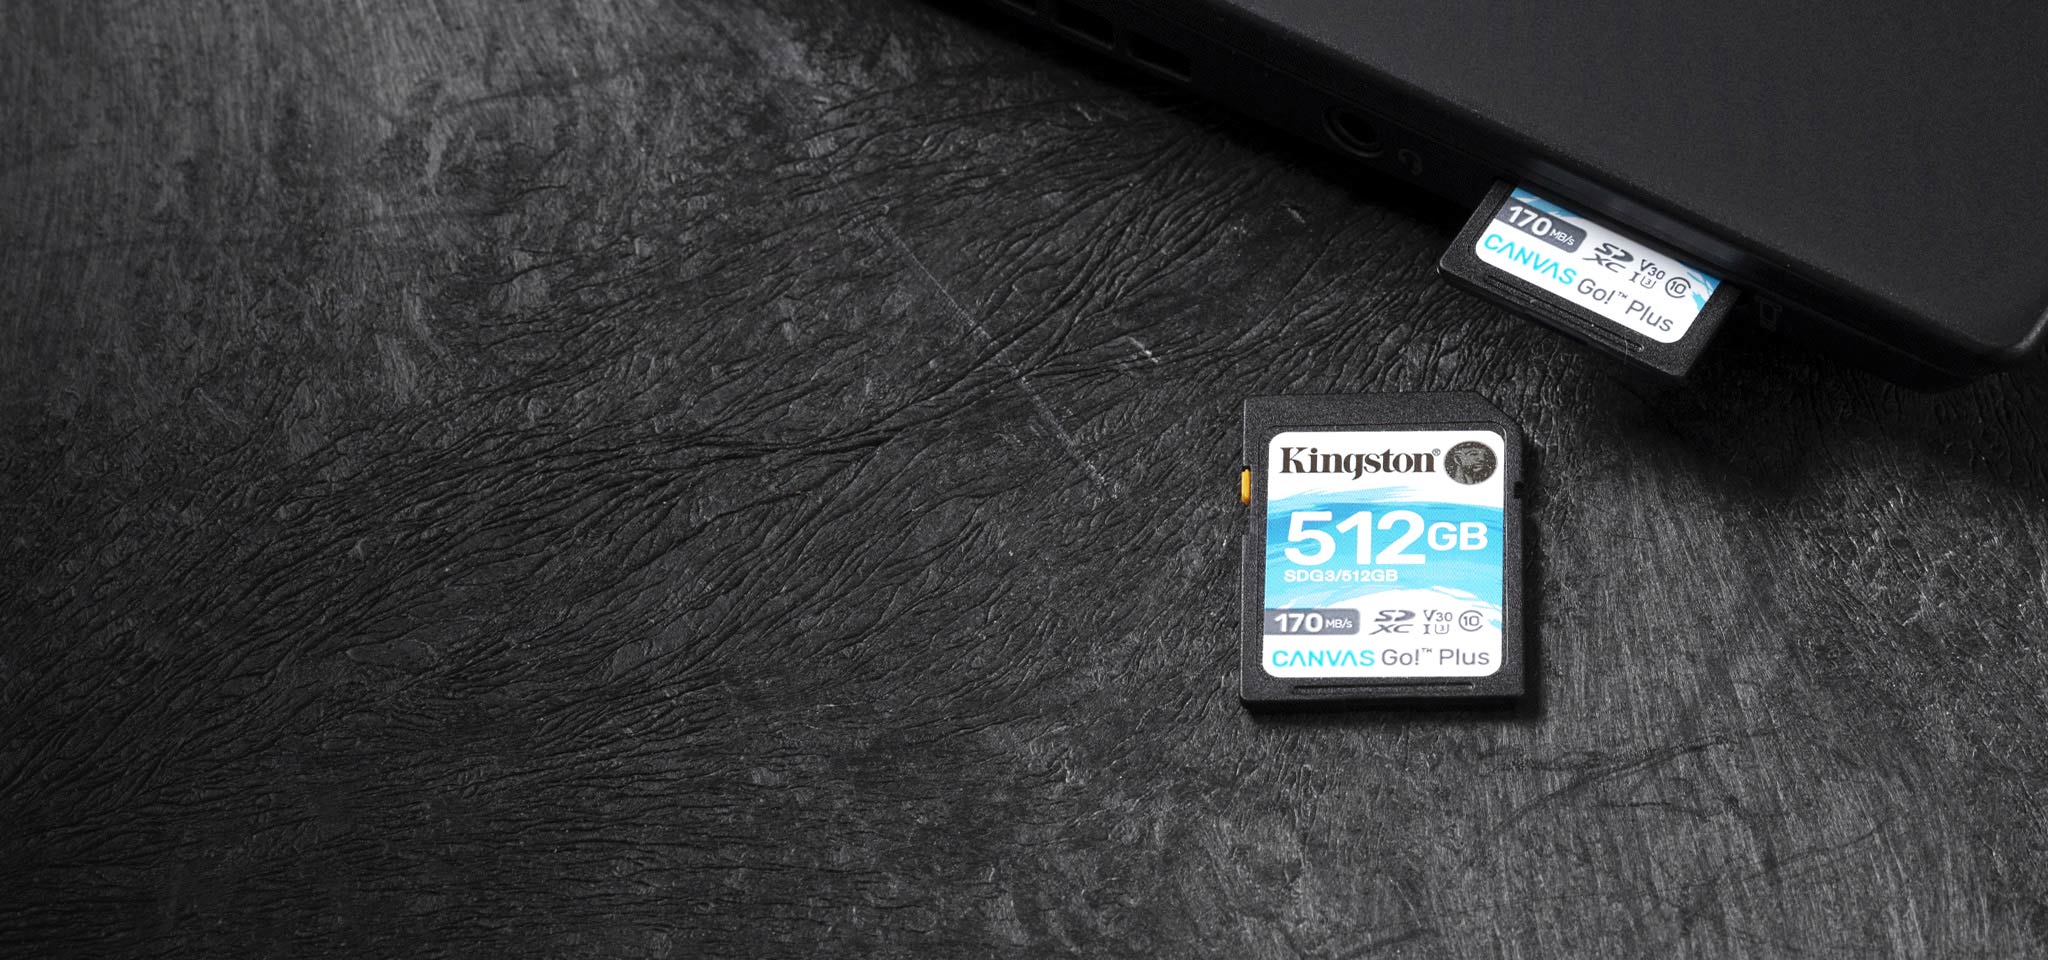 Kartu microSD Canvas Go! Plus diletakkan pada permukaan hitam dan di belakangnya ada kartu lain yang dipasang ke laptop